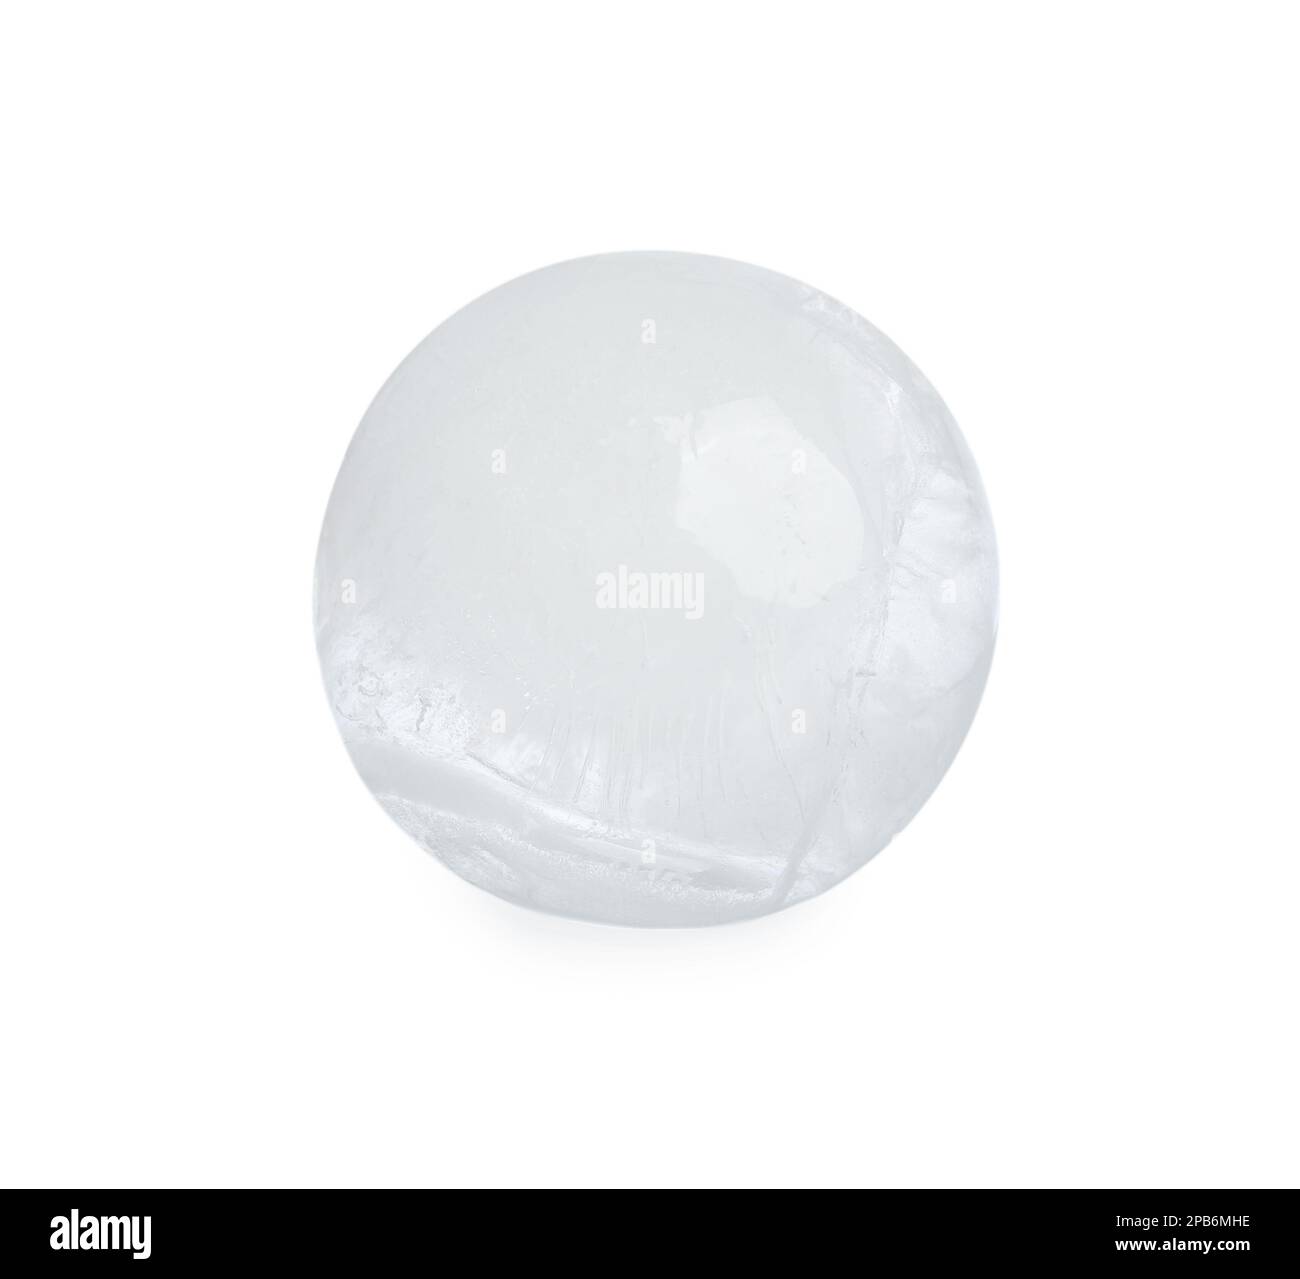 https://c8.alamy.com/comp/2PB6MHE/one-frozen-ice-ball-isolated-on-white-2PB6MHE.jpg